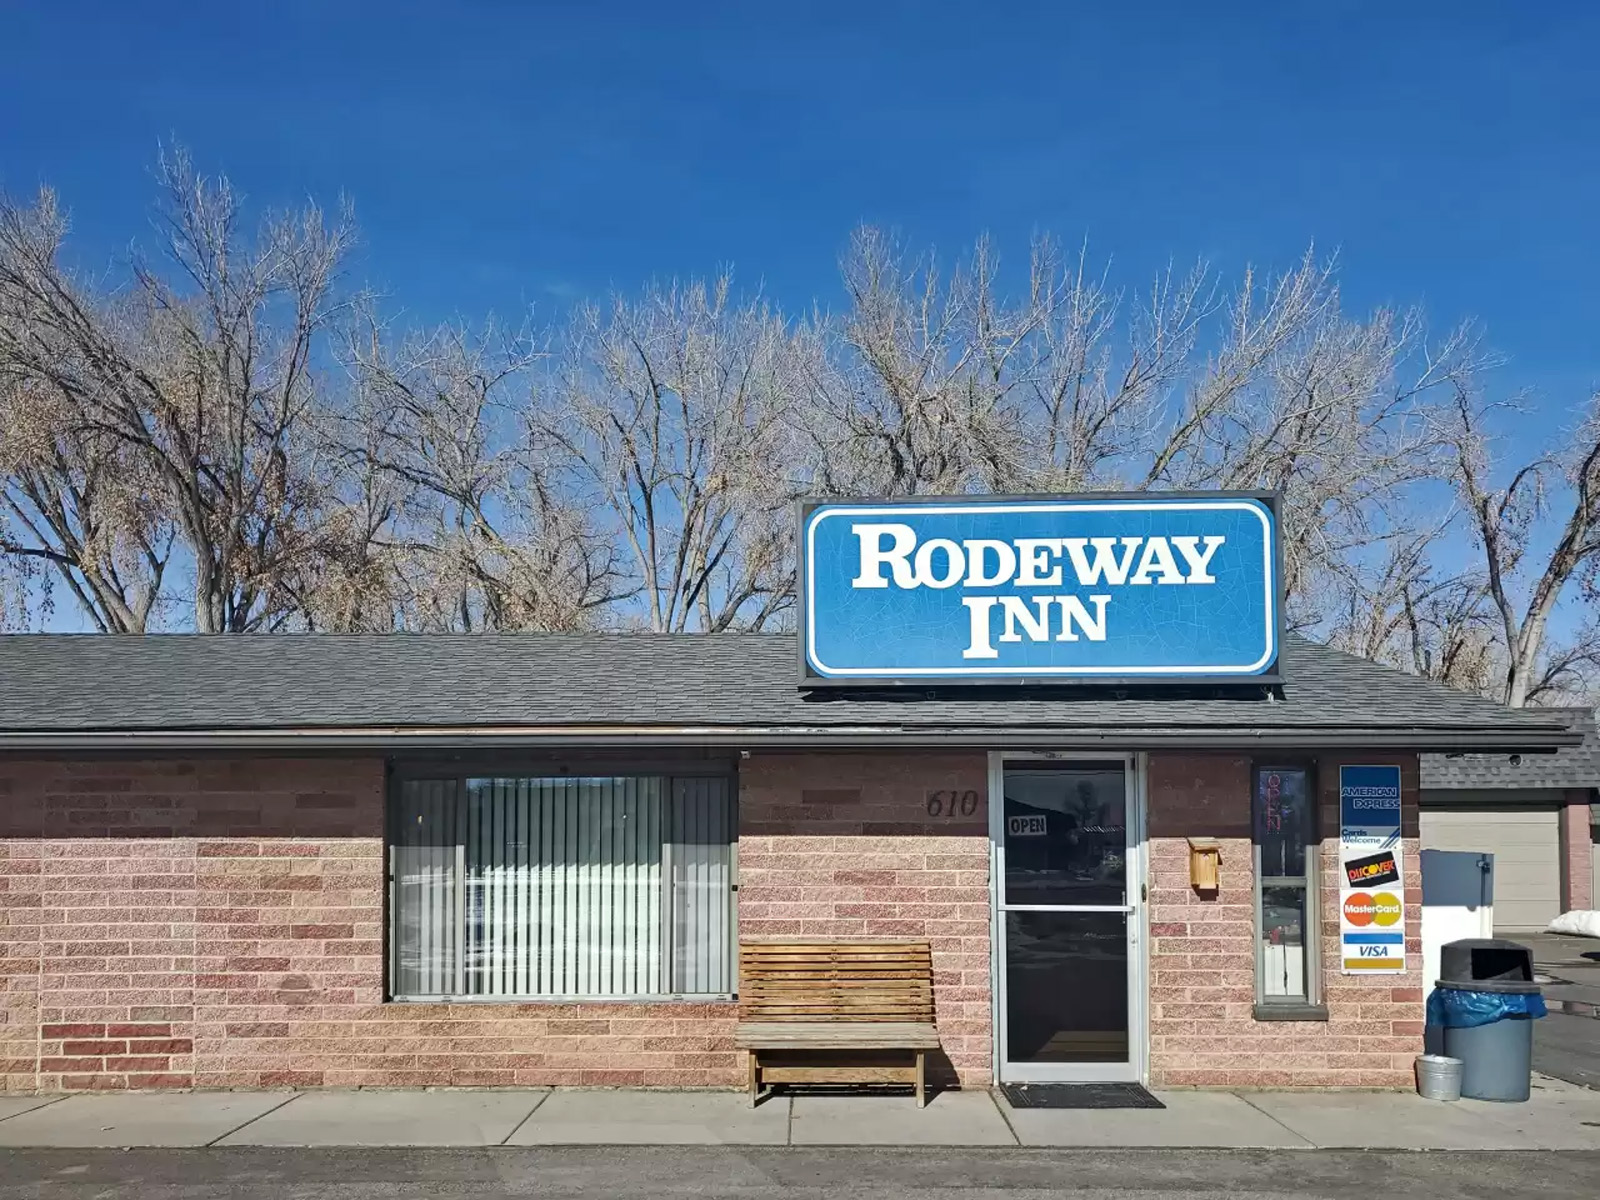 Rodeway Inn / Wyo Motel